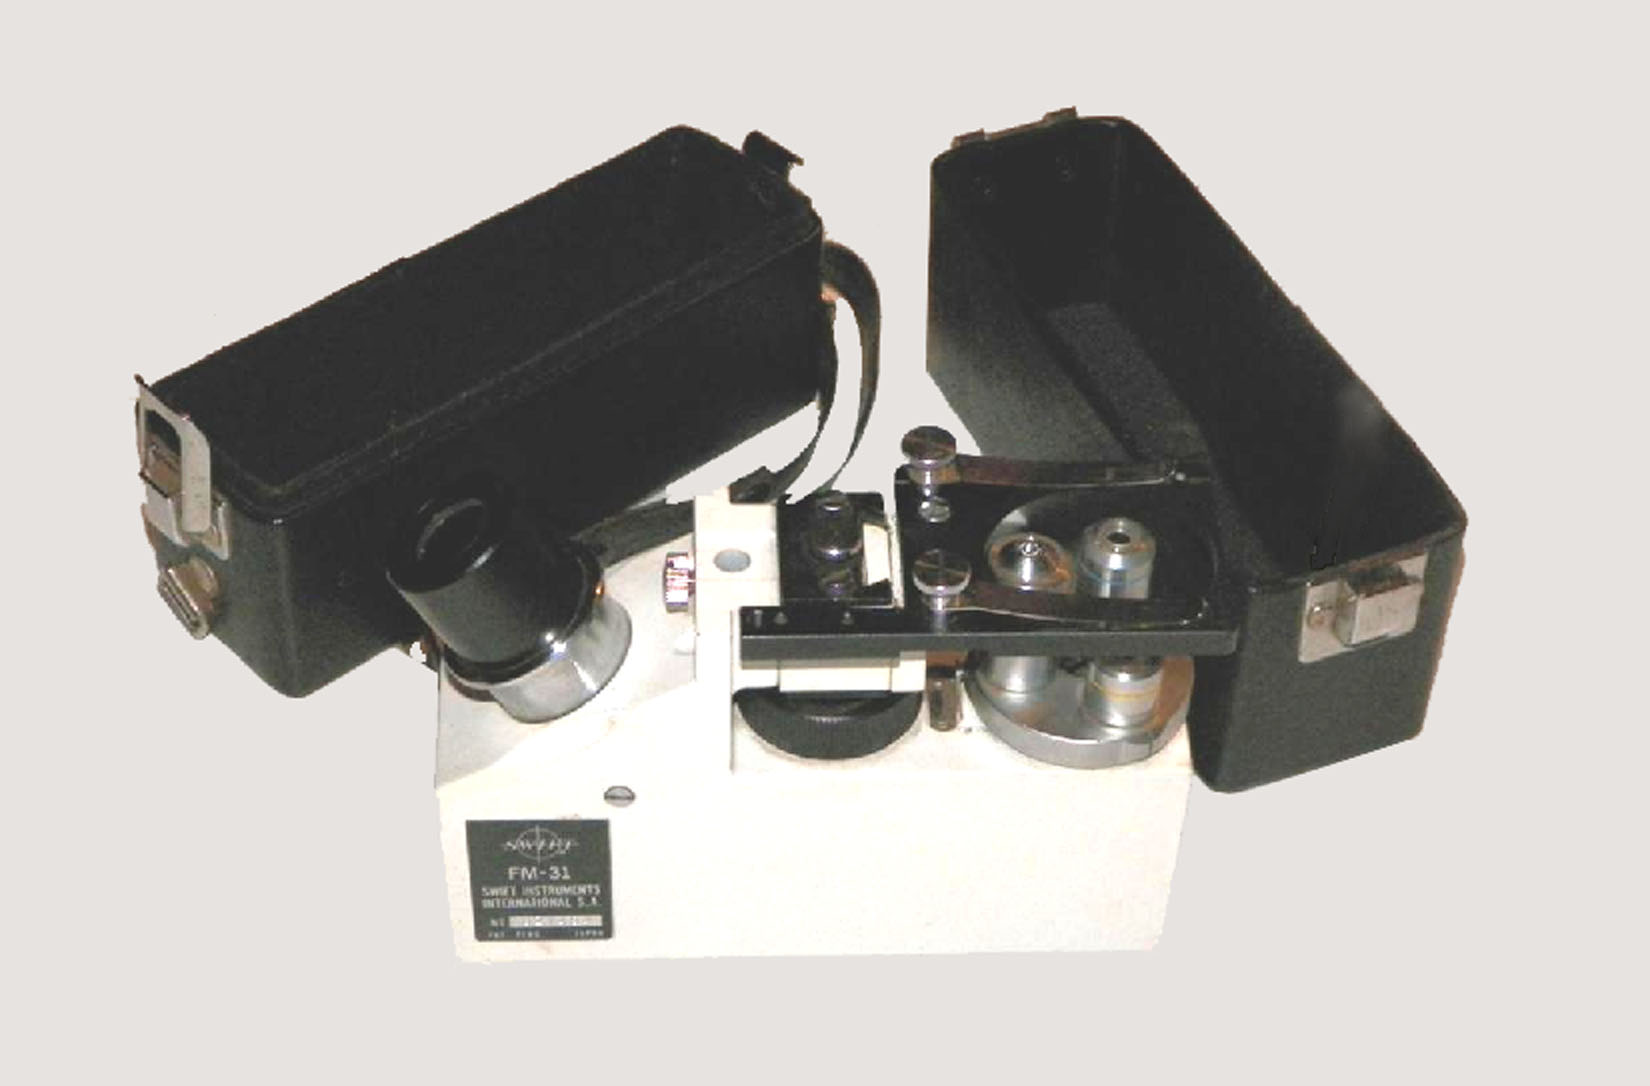 FM-31 Microscope Case